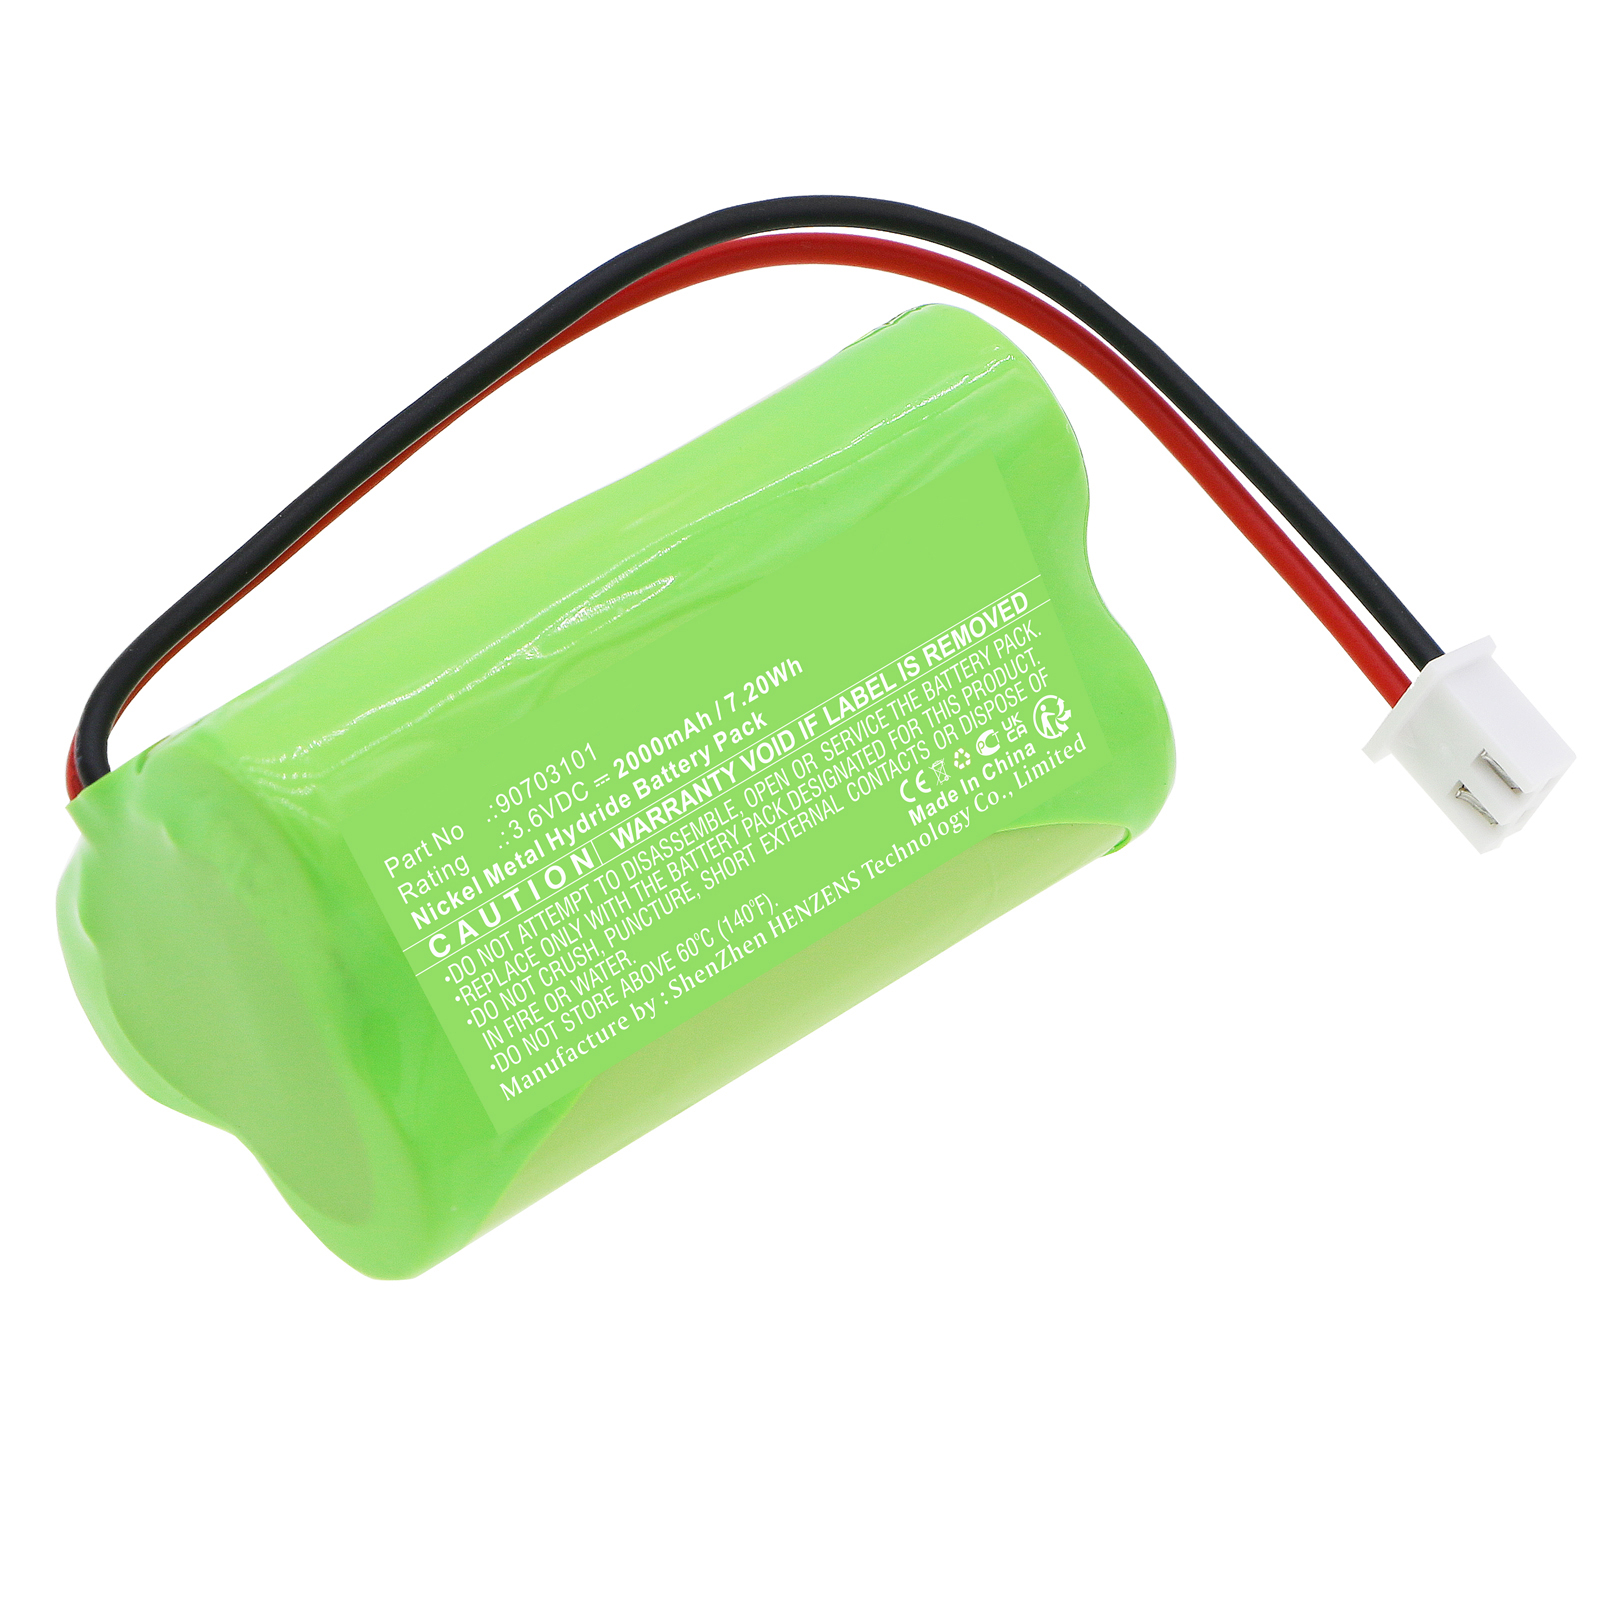 Synergy Digital Emergency Lighting Battery, Compatible with Brennstuhl 90703101 Emergency Lighting Battery (Ni-MH, 3.6V, 2000mAh)